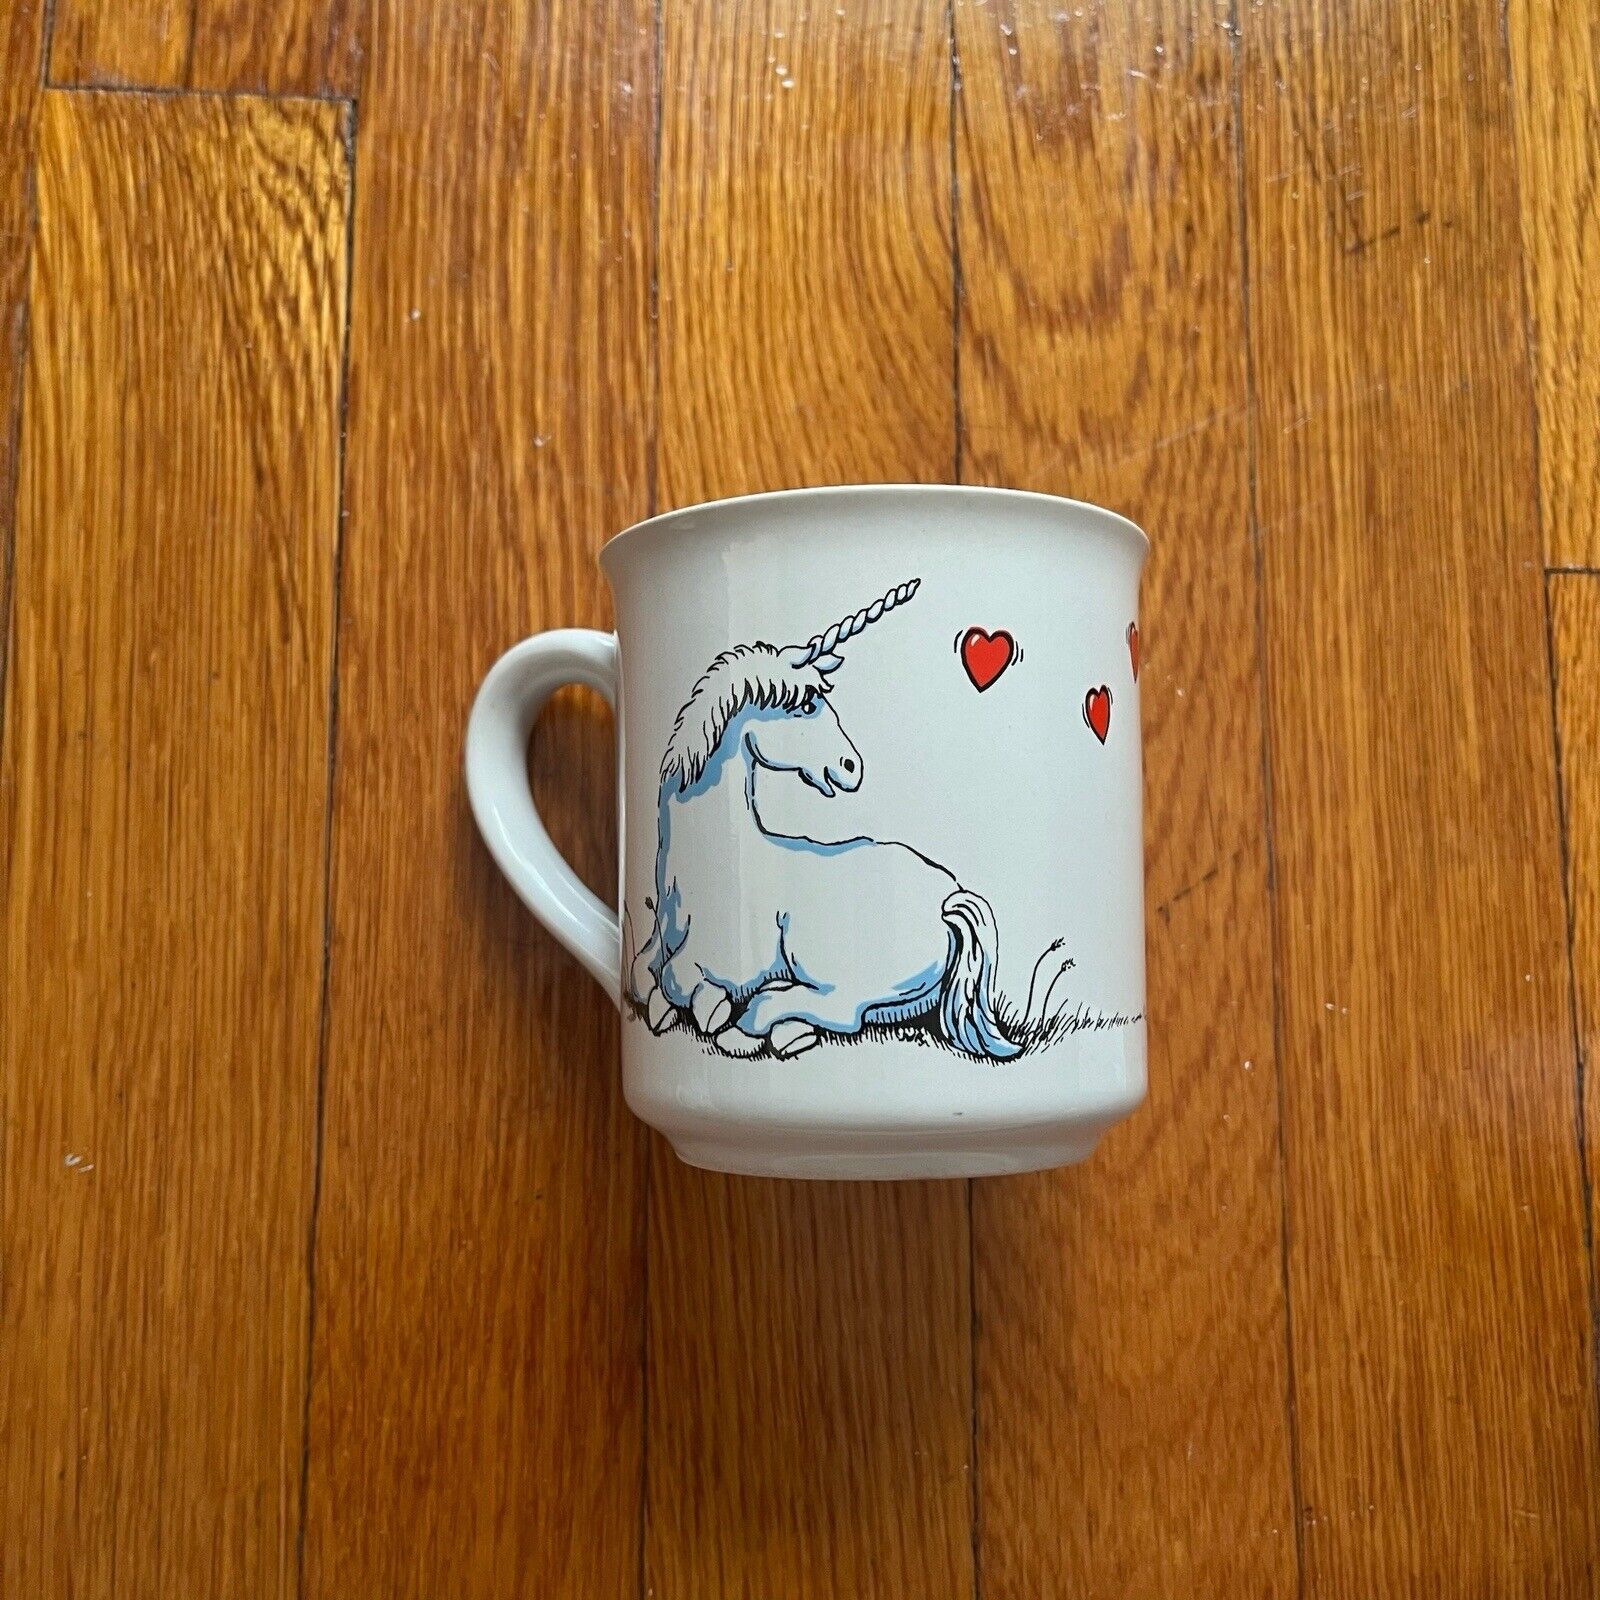 Vintage Russ Unicorn Mug Cute Kitsch 